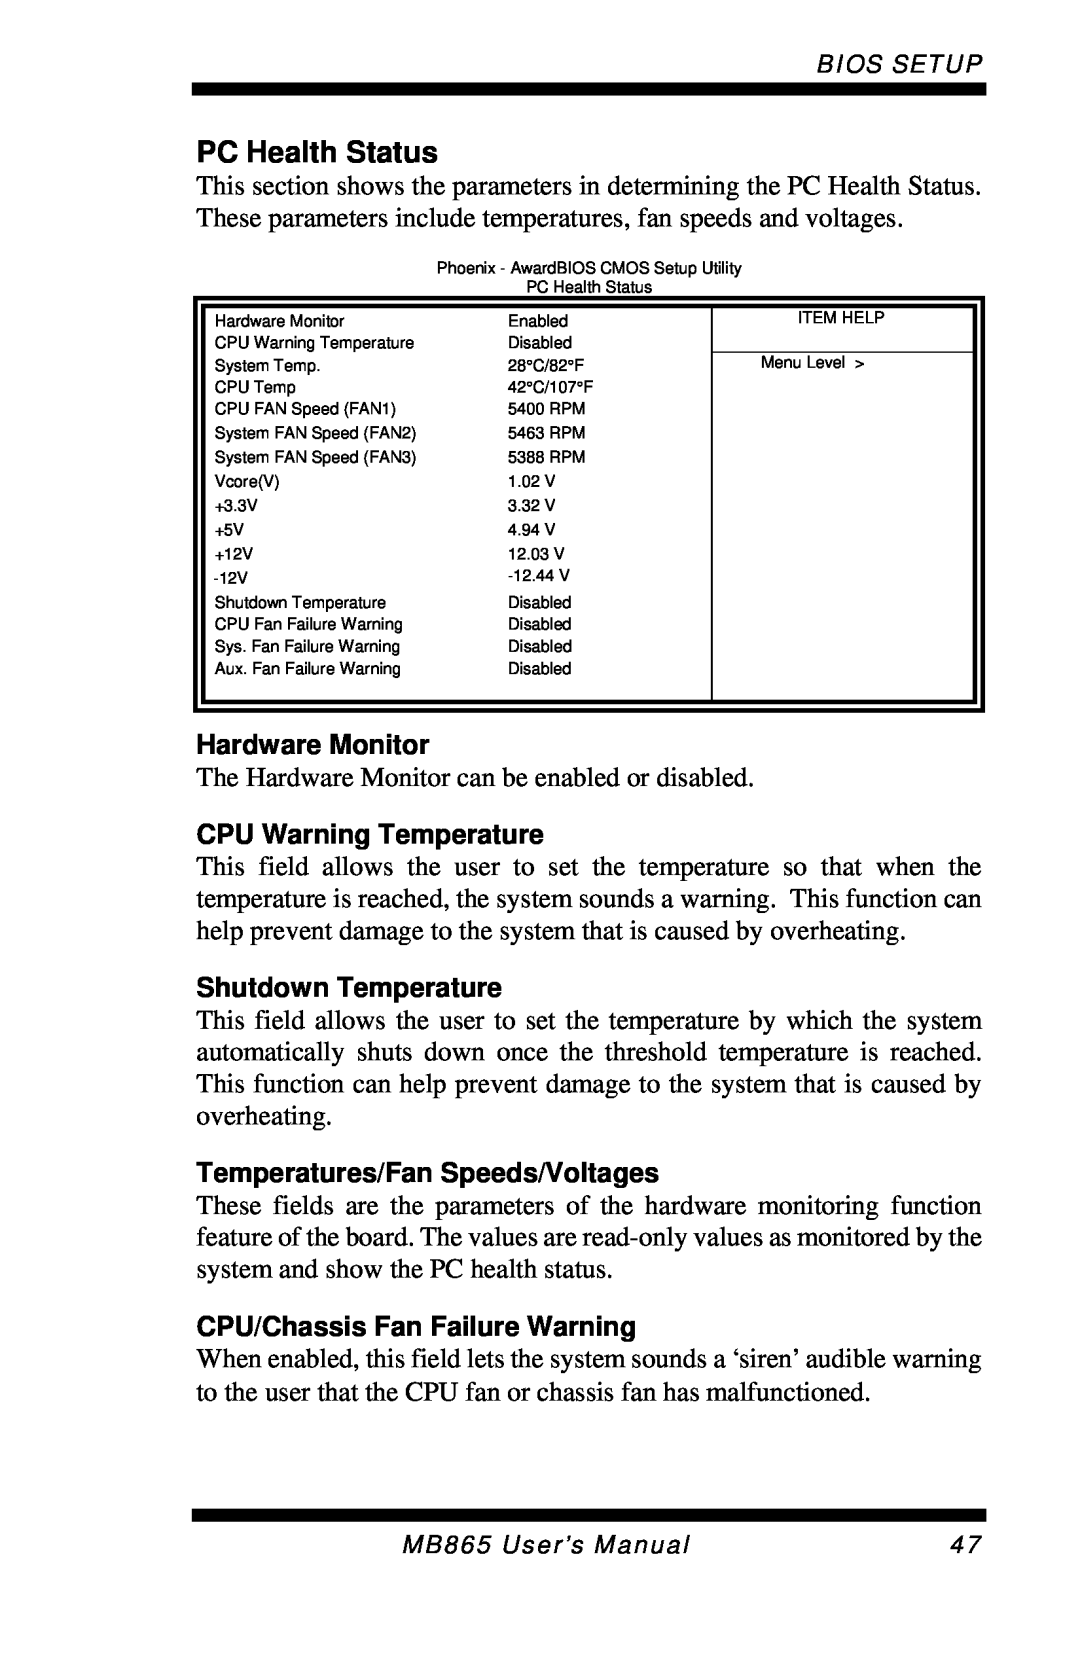 Intel MB865 user manual PC Health Status, Hardware Monitor, CPU Warning Temperature, Shutdown Temperature 